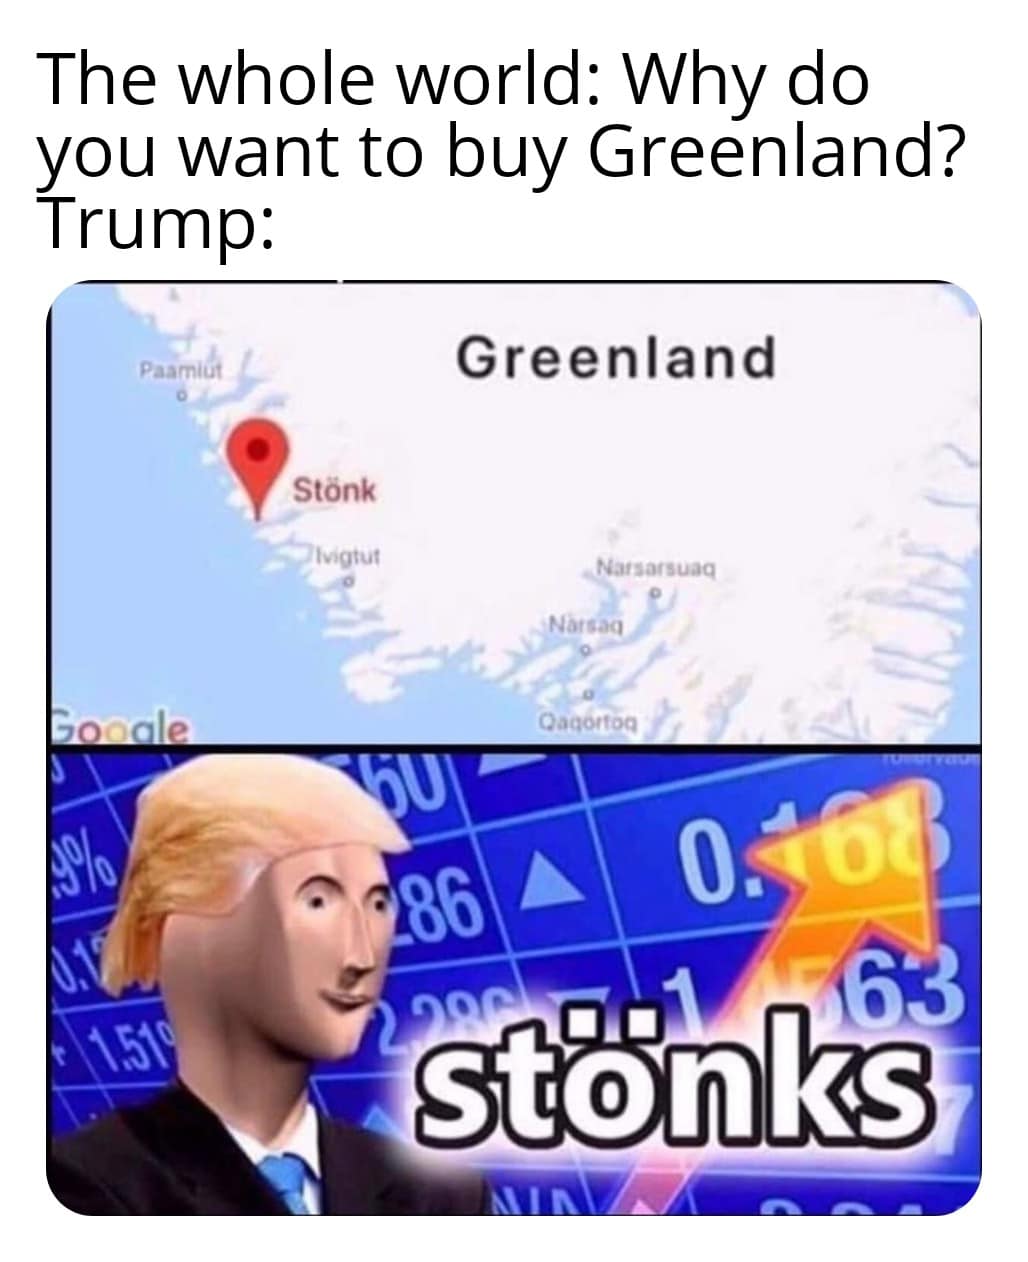 Dank Meme dank-memes cute text: The whole world: Why do you want to buy Greenland? Trump: P..amtuf Stönk ' tv•gtut Greenland . Nanatsuaq stönks 